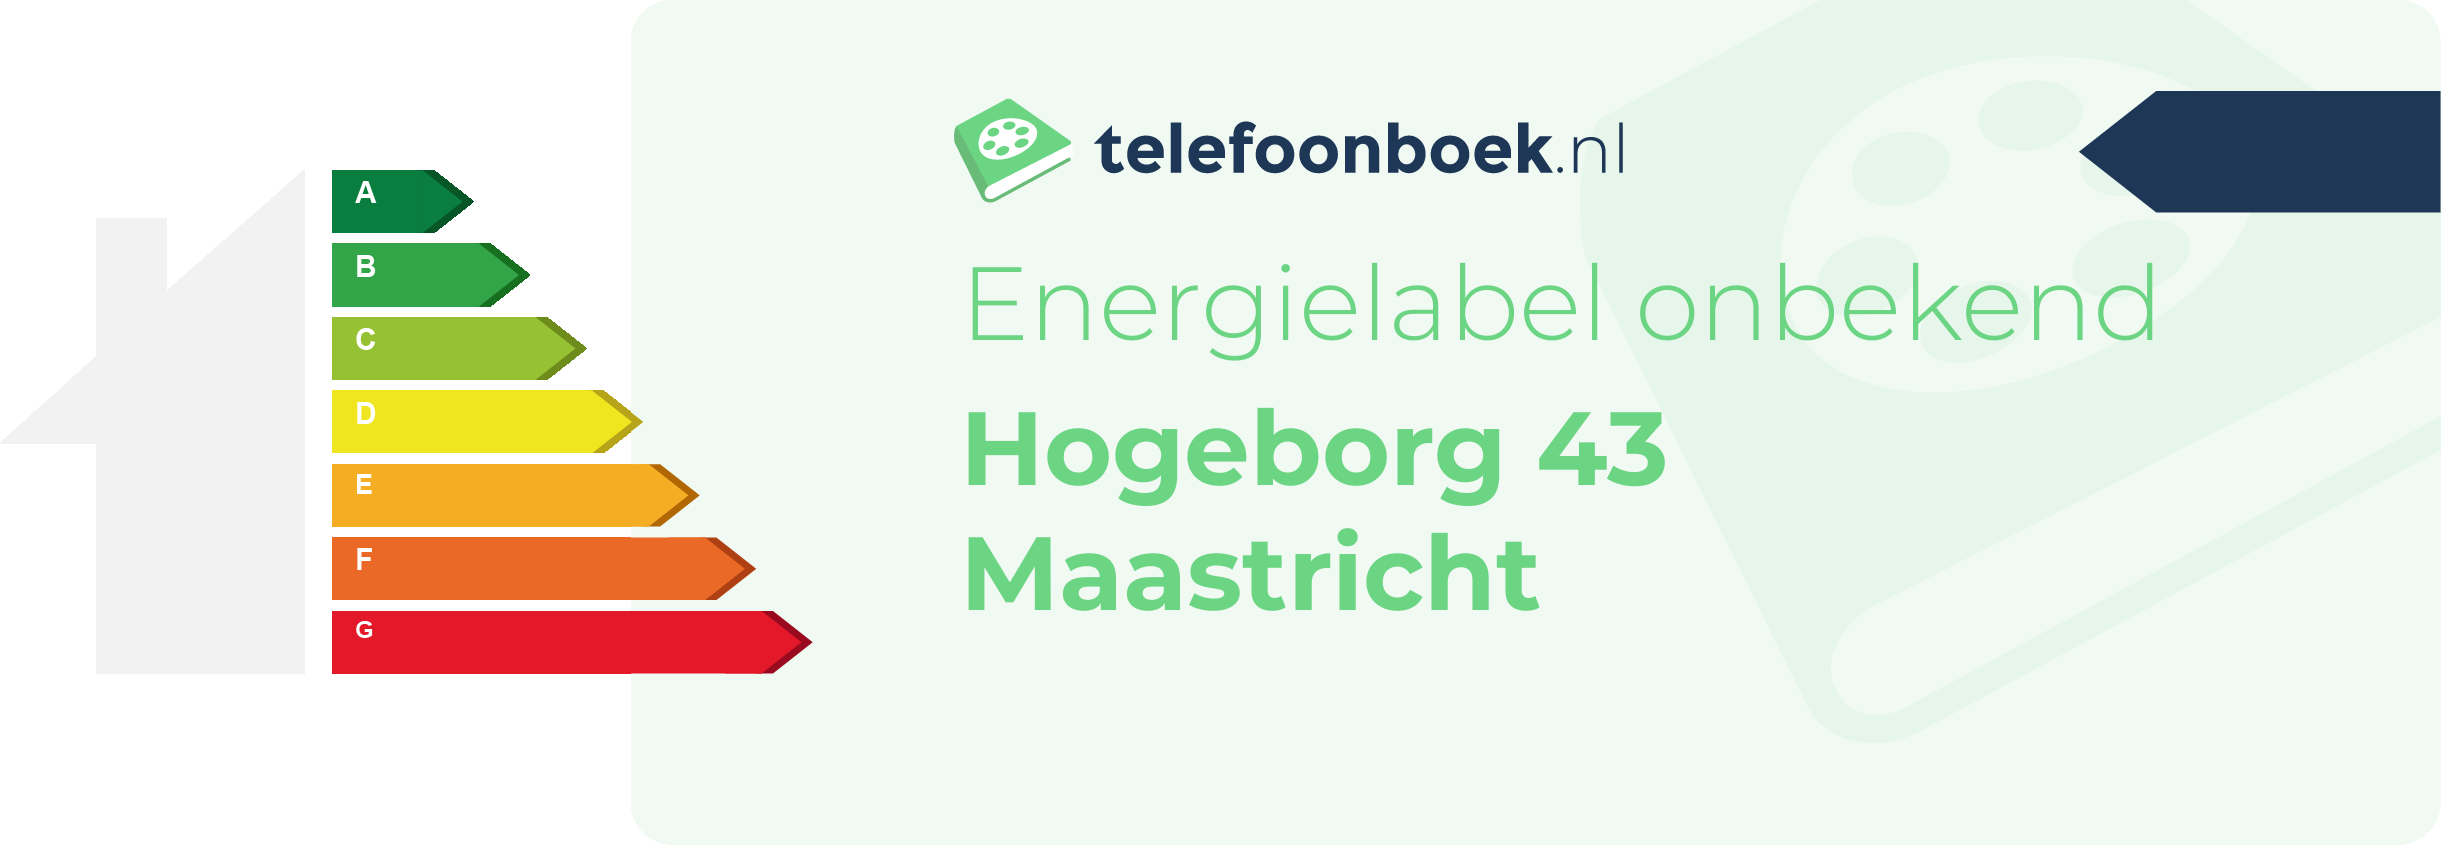 Energielabel Hogeborg 43 Maastricht